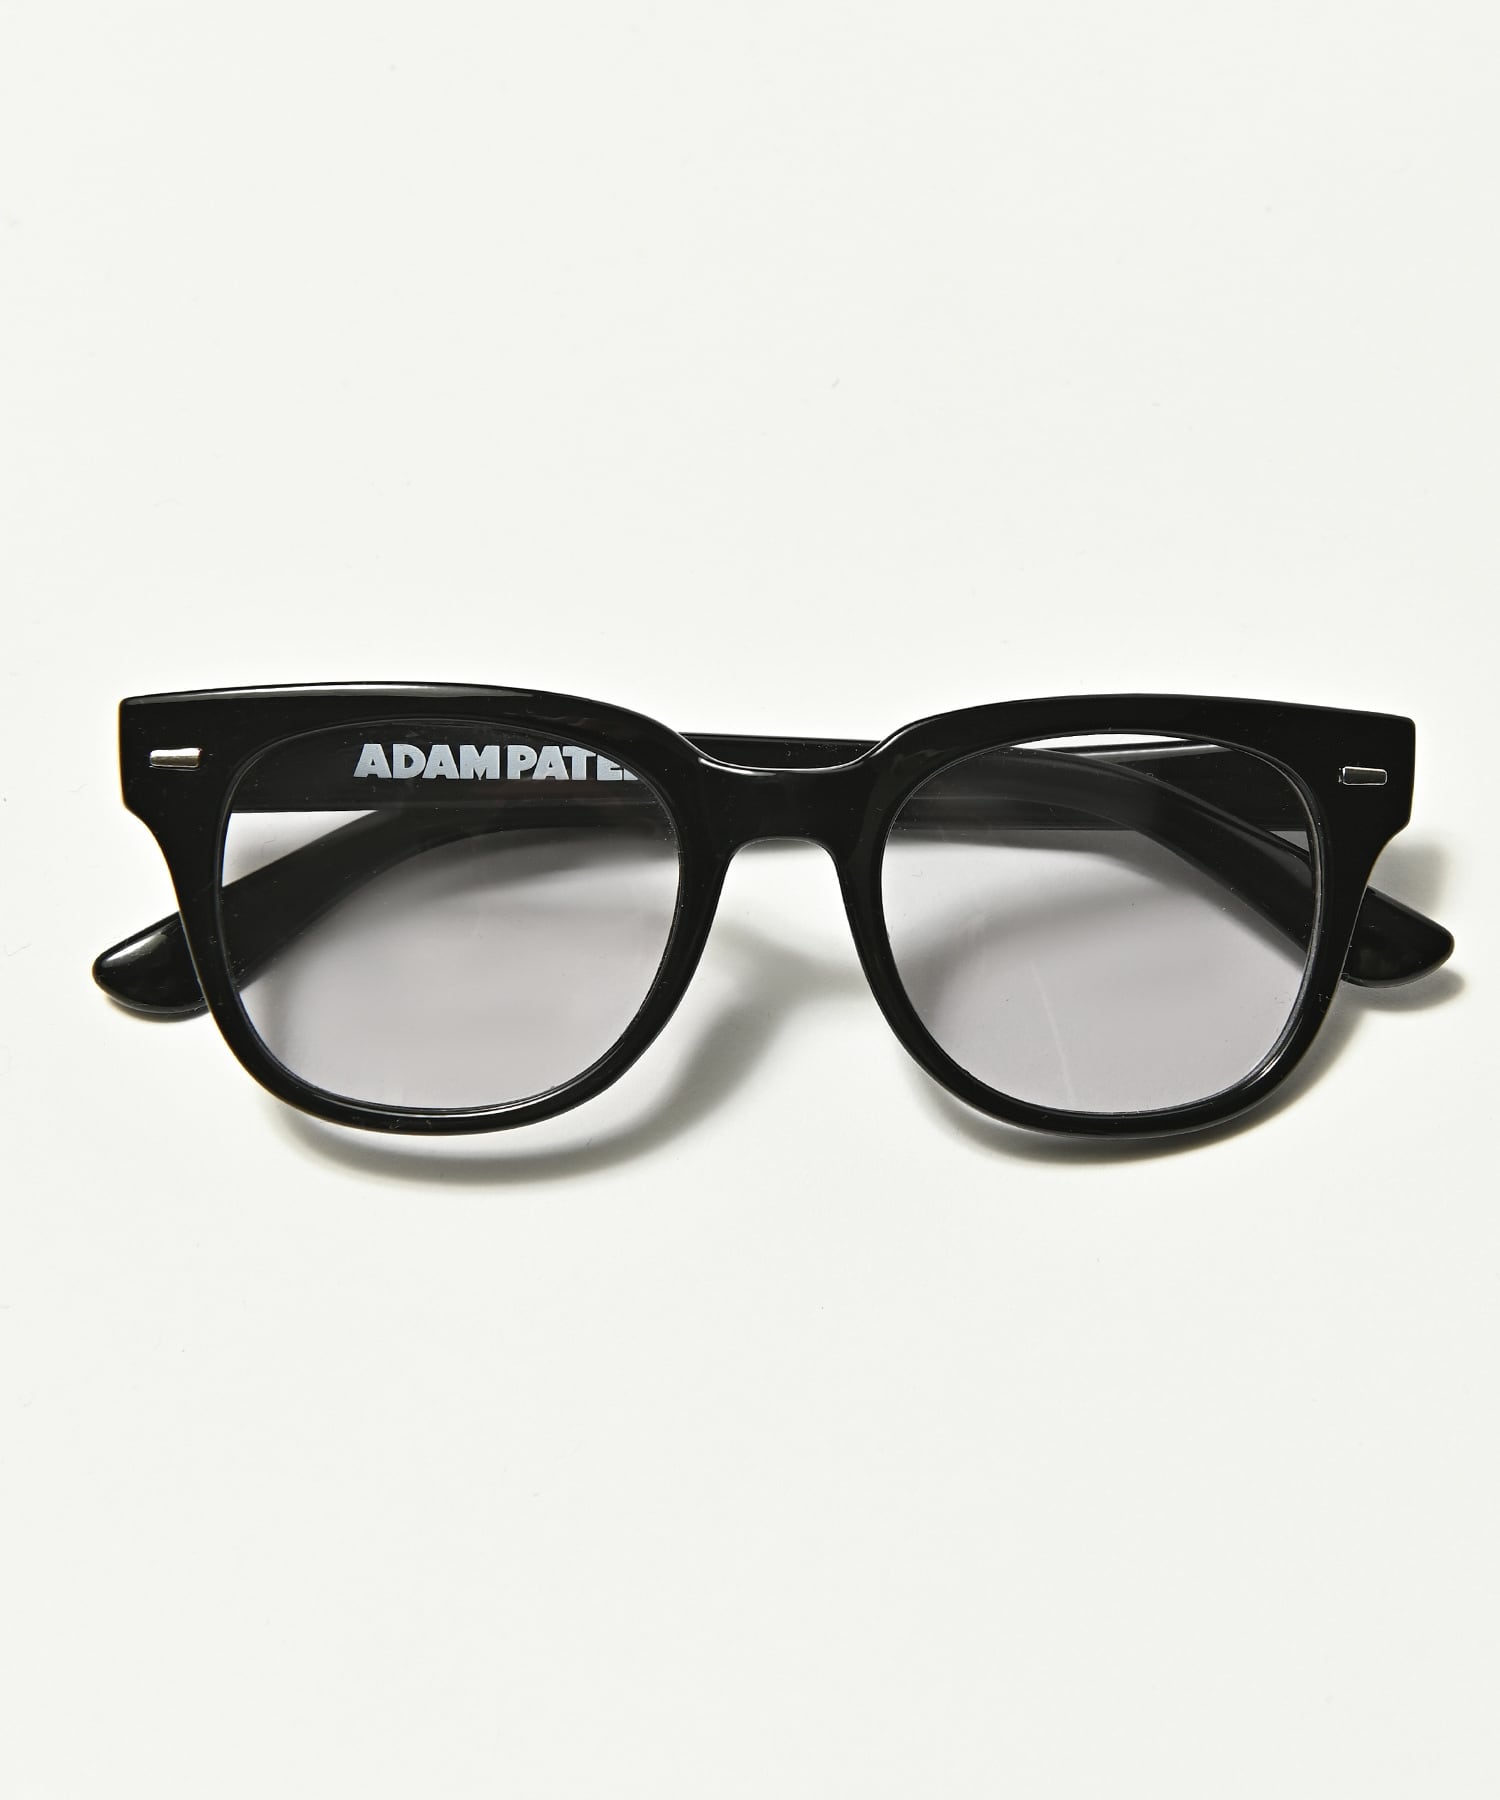 ADAM PATEK dimmable Lens cell sunglasses (BLK/GRY) AP2319040